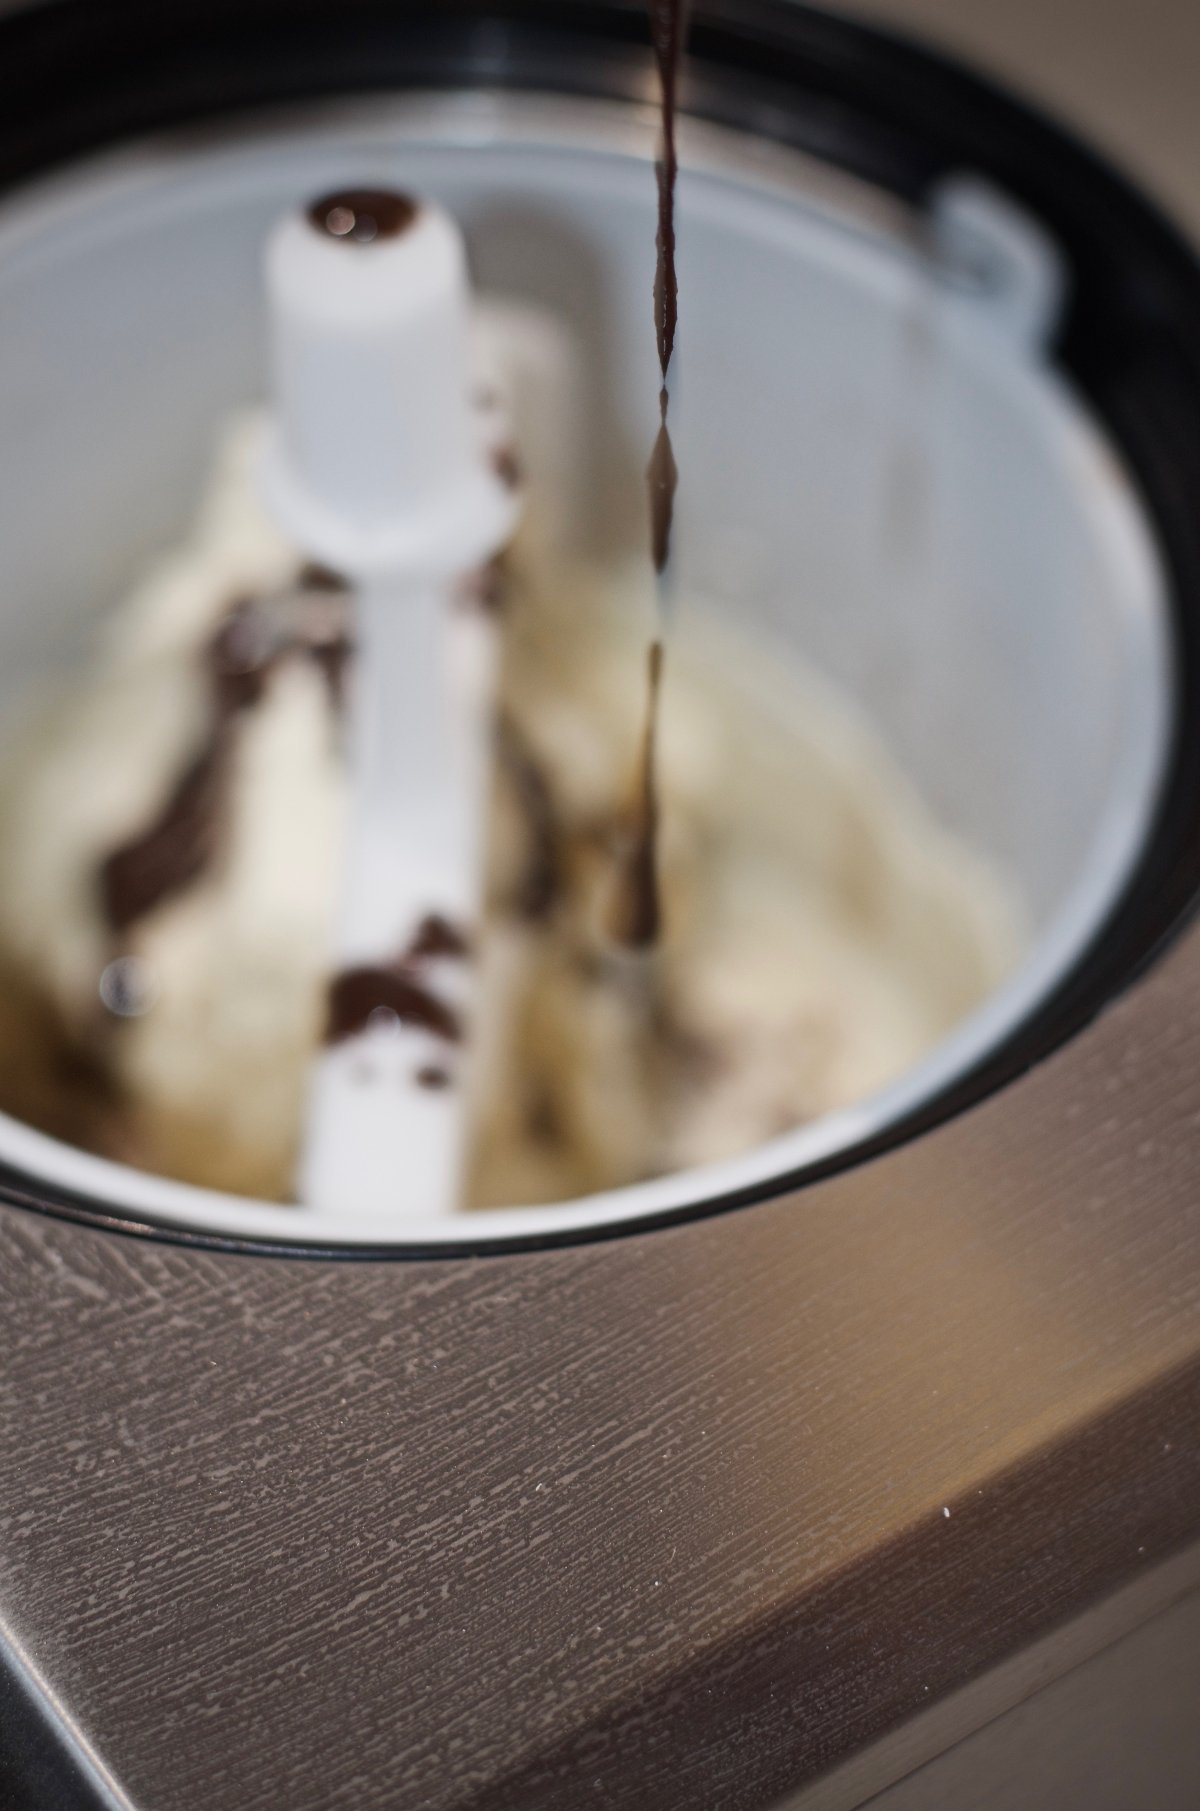 Adding chocolate threads to ice cream